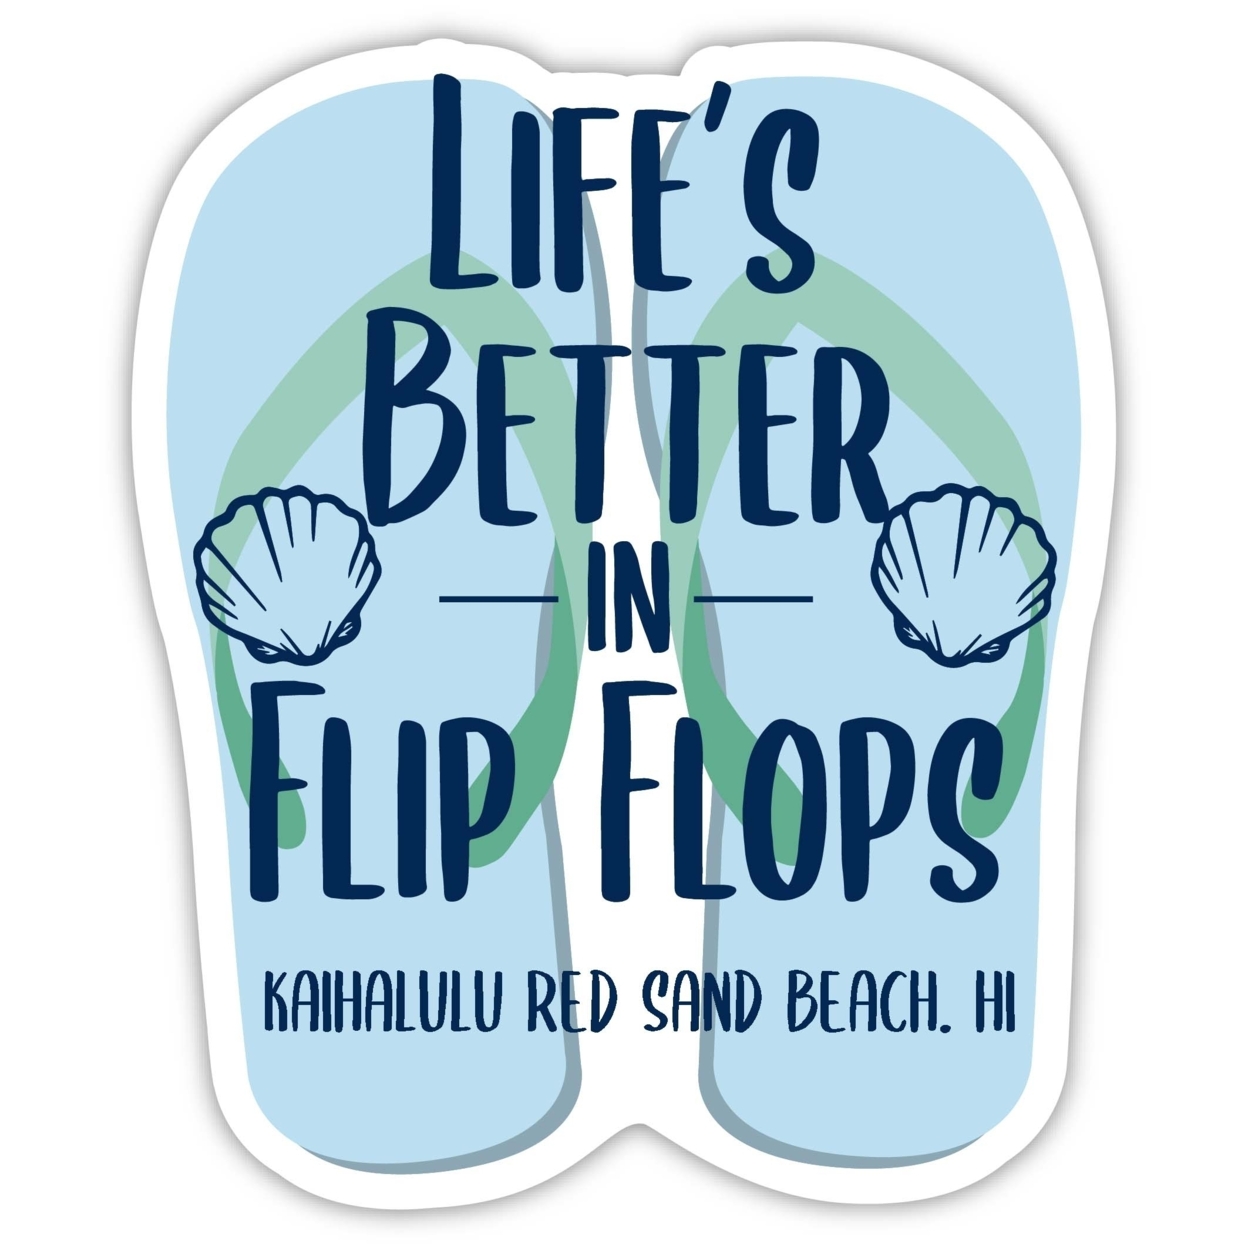 Kaihalulu Red Sand Beach Hawaii Souvenir 4 Inch Vinyl Decal Sticker Flip Flop Design